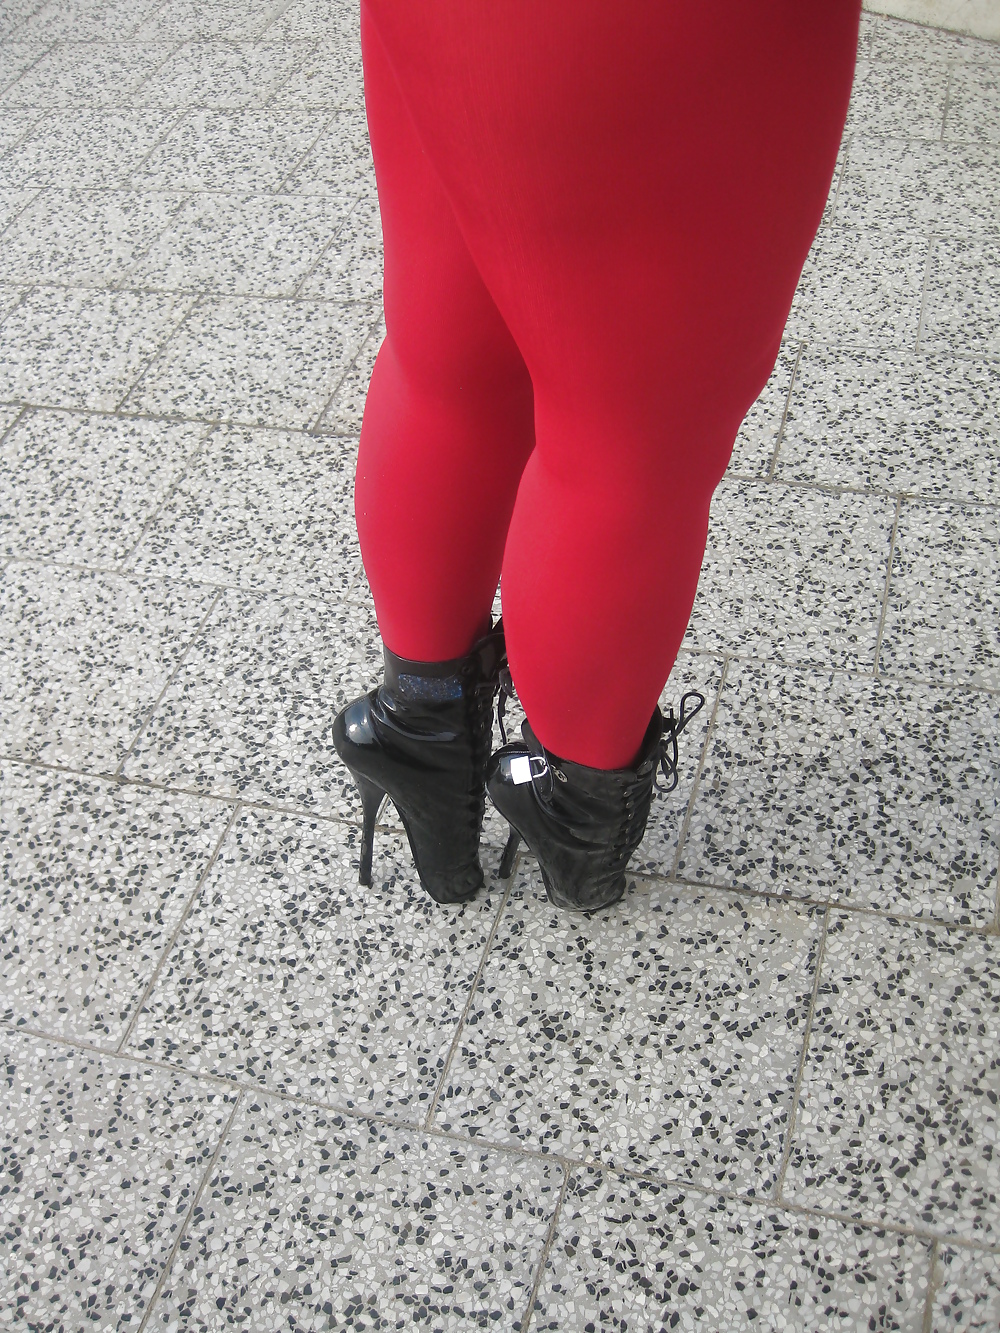 Gina White Austria pornbabe love my ballets boots
 #4230423